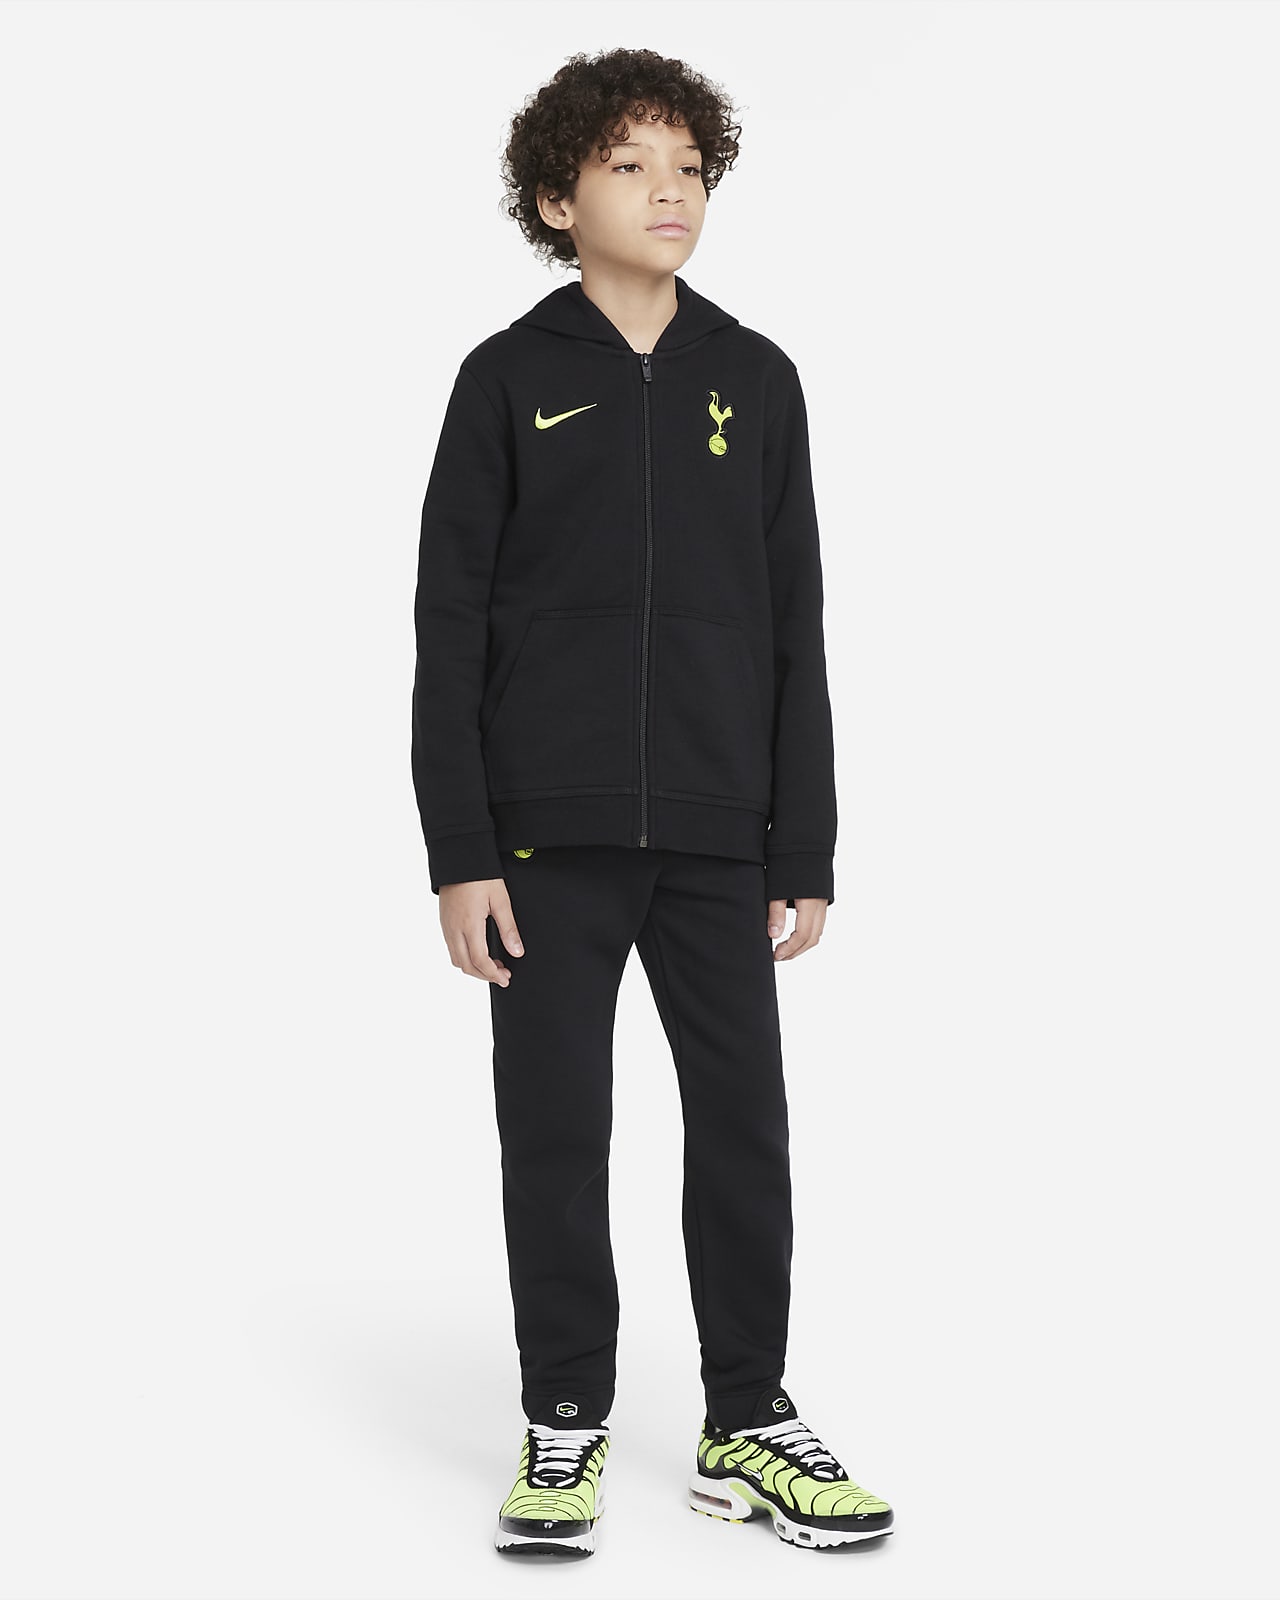 Tottenham Big Kids' Fleece Soccer Nike.com